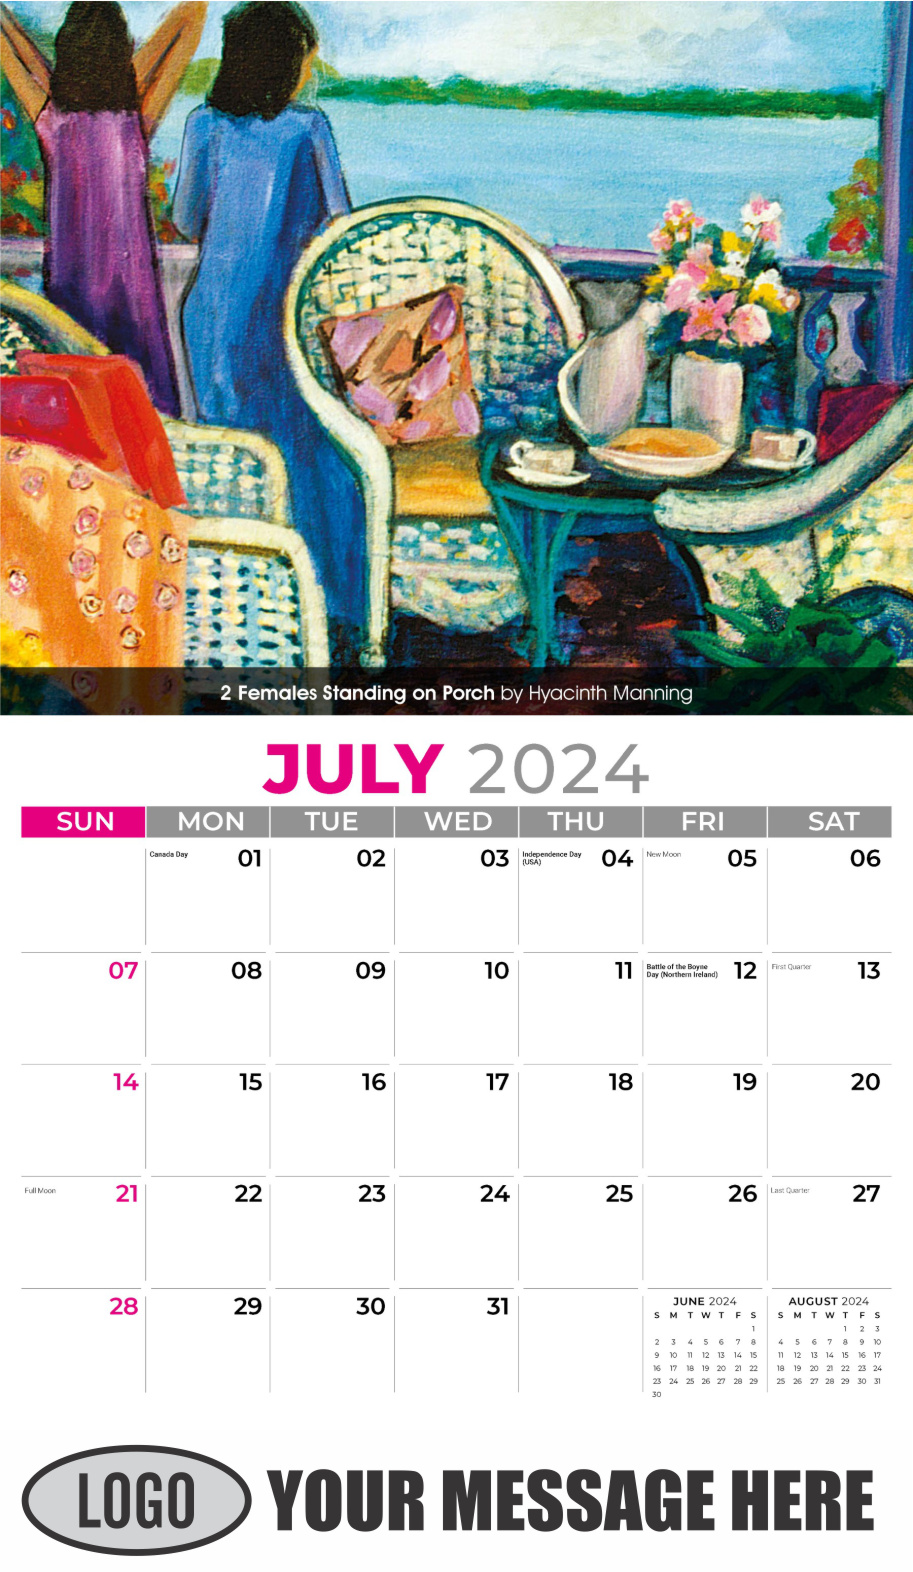 Celebration of African American Art 2024 Business Promotional Calendar - July